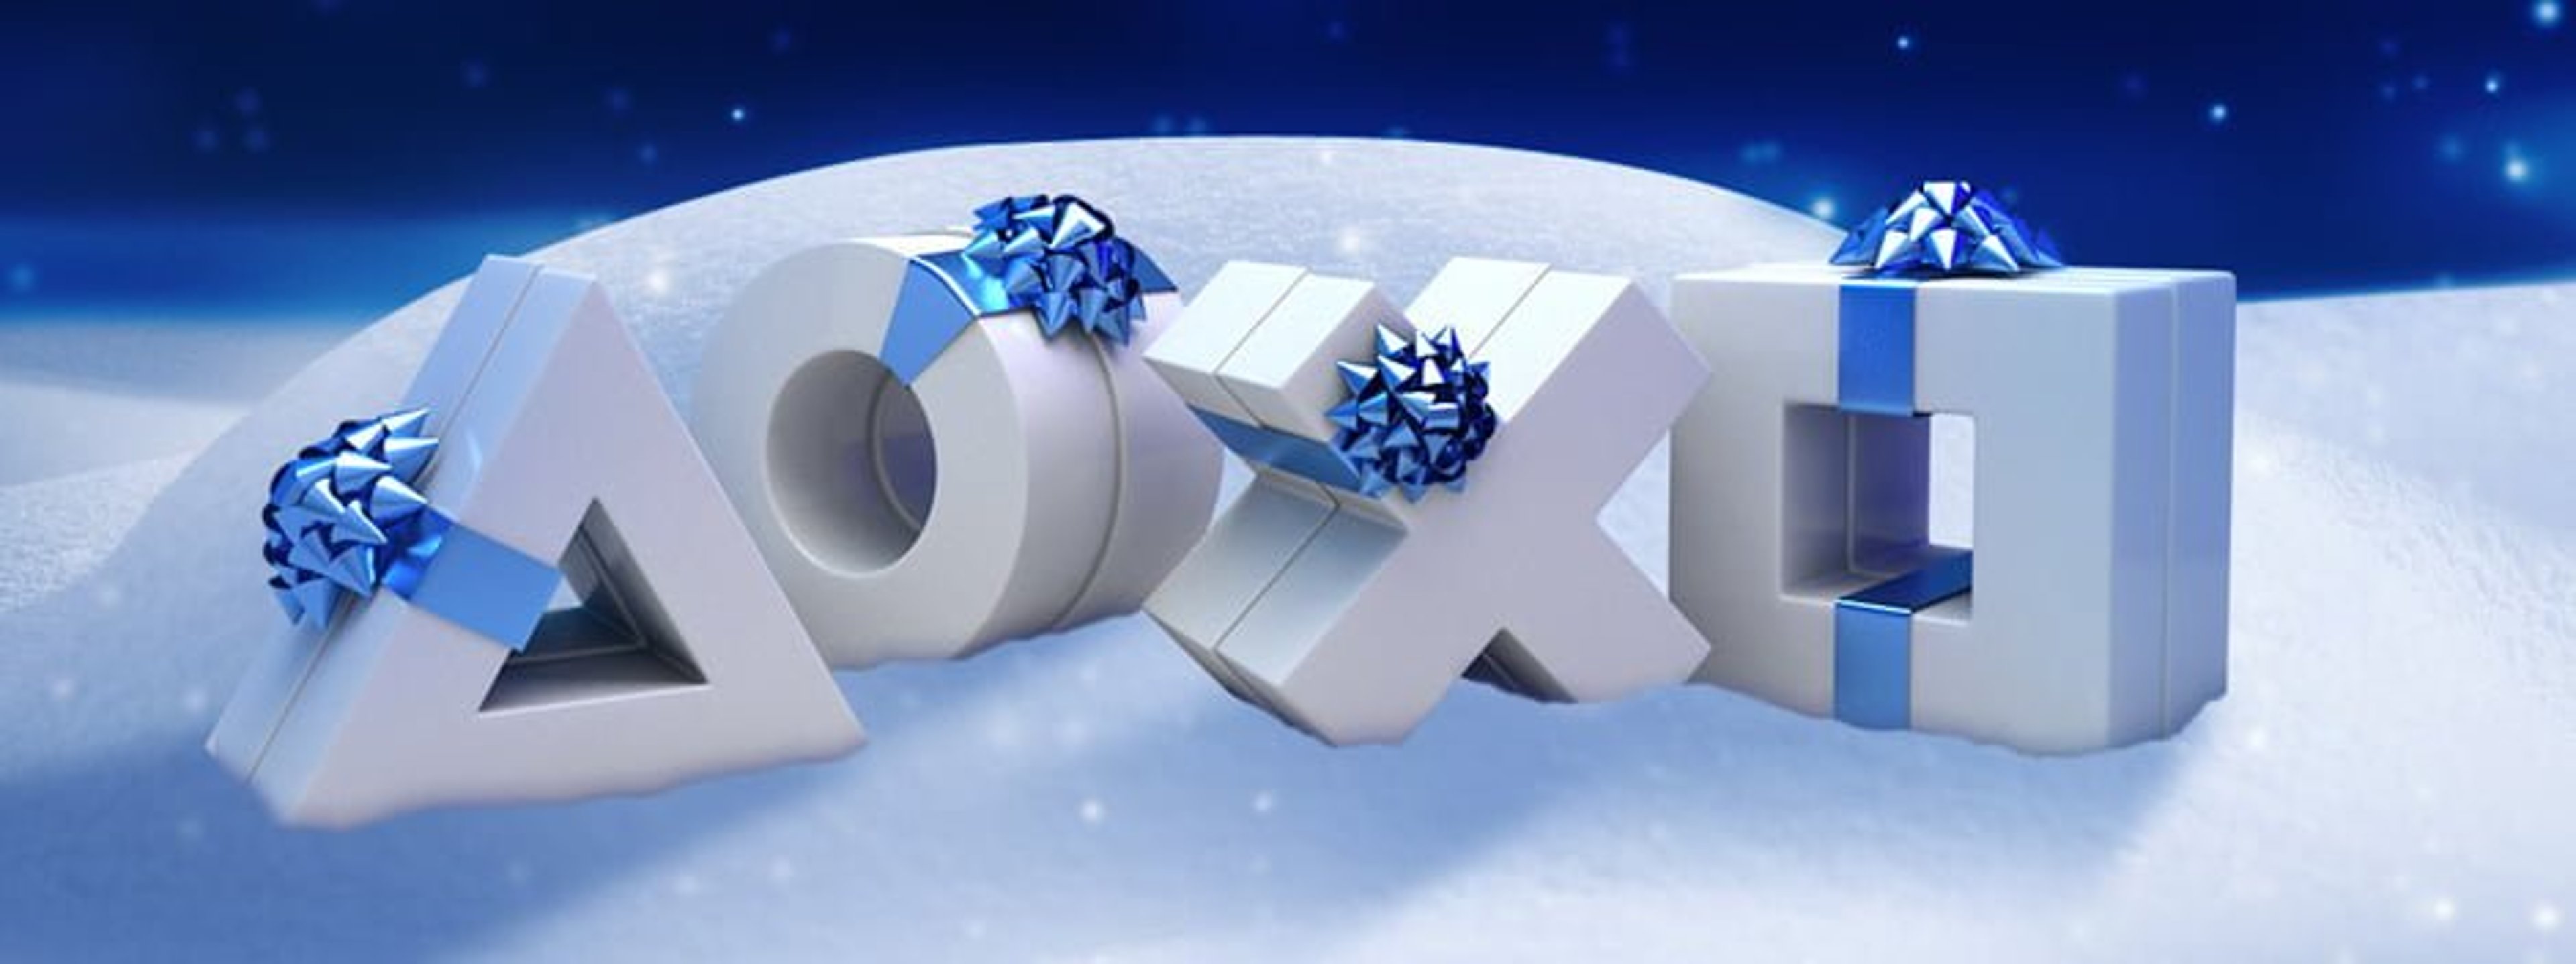 PlayStation, nuove offerte per i saldi natalizi